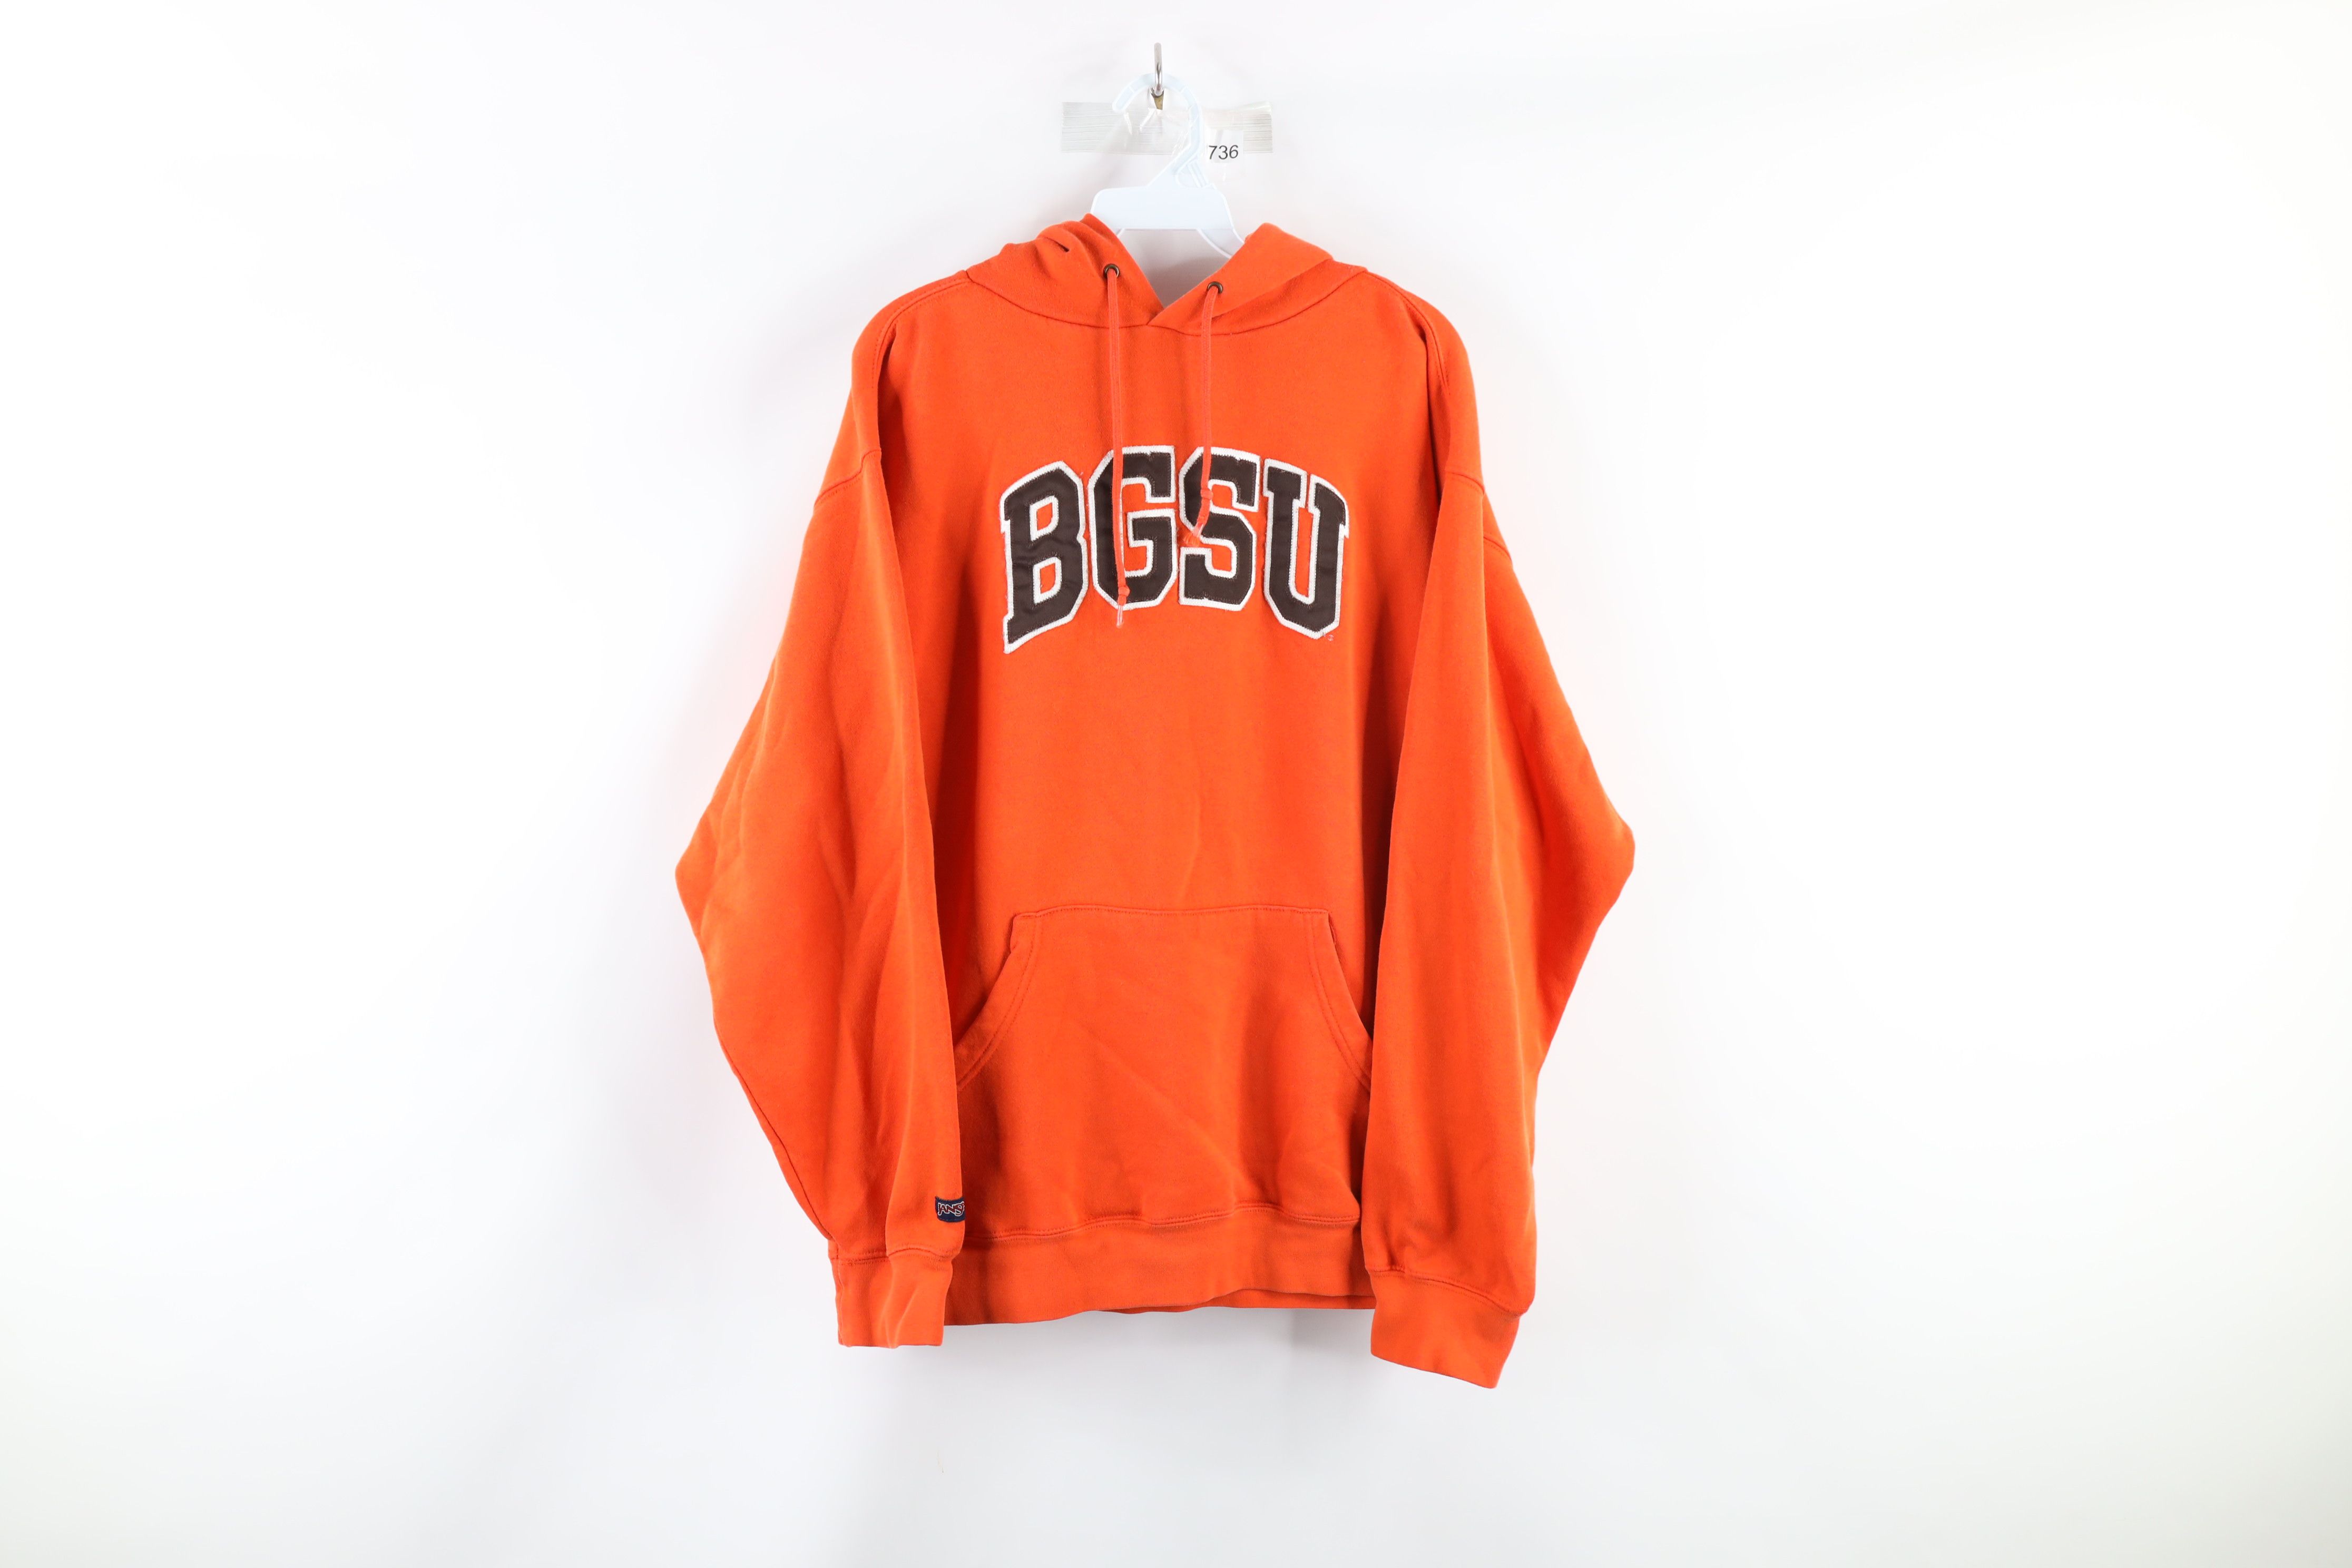 Vintage Vintage 90s Bowling Green State University Hoodie Orange Size US L / EU 52-54 / 3 - 1 Preview